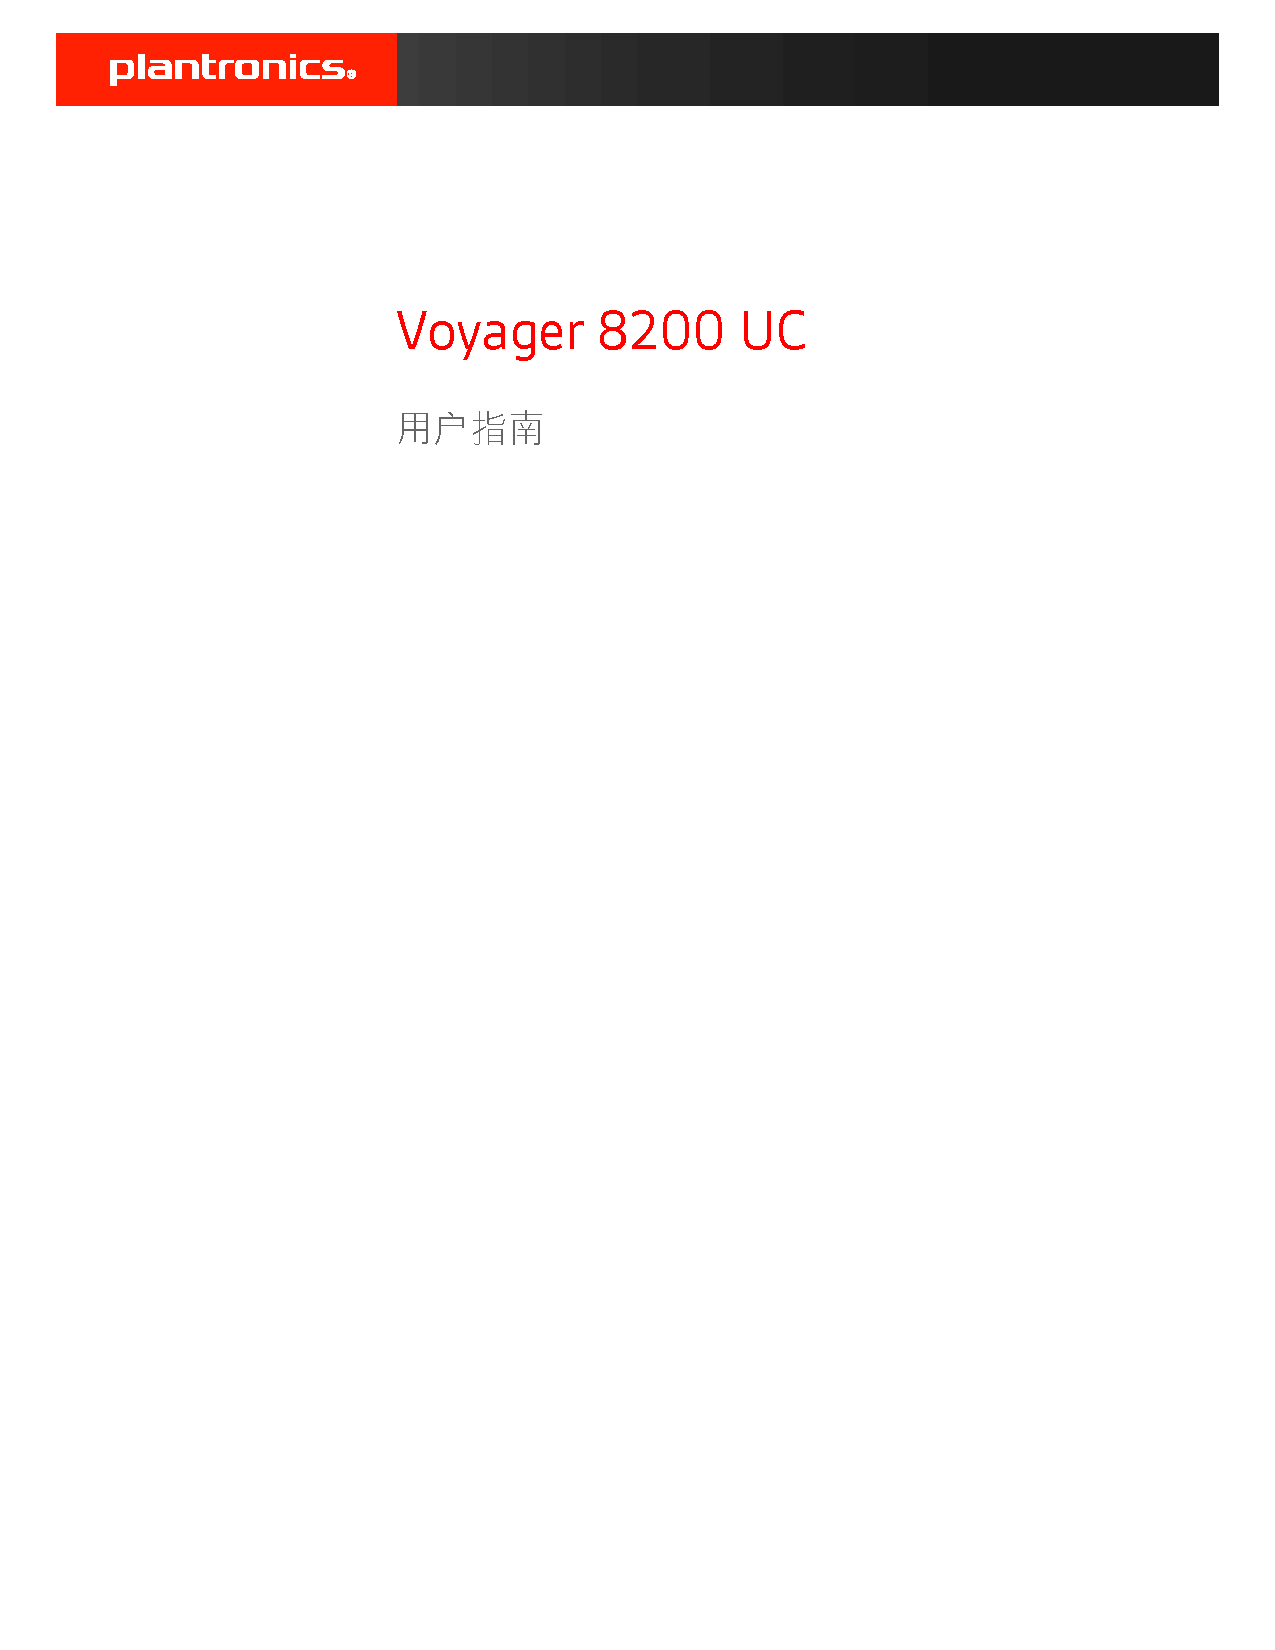 缤特力 Plantronics Voyager 8200 UC 用户指南 封面